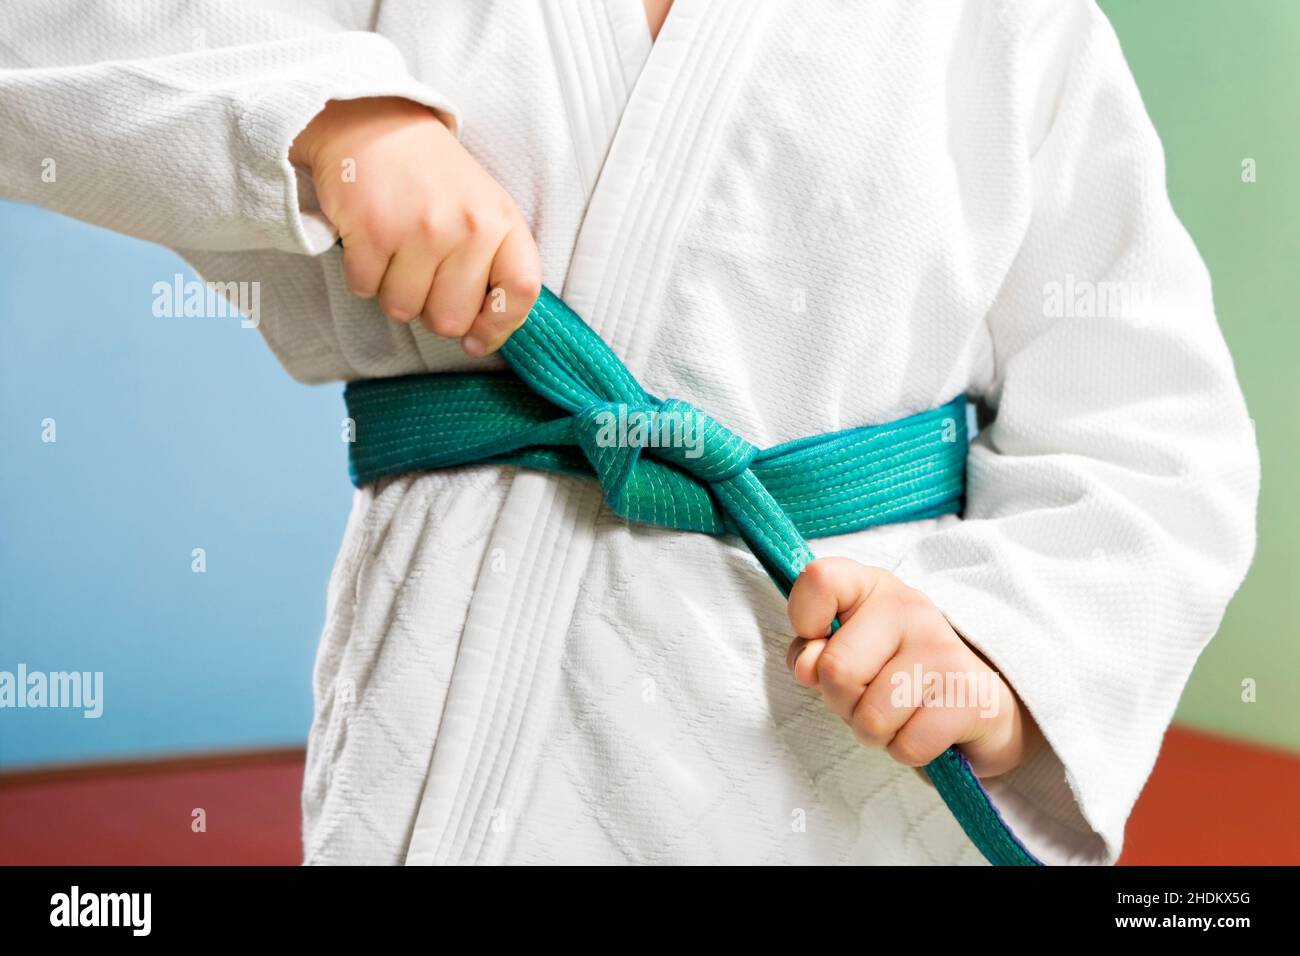 verde, judo, kimono, greens, judos, cinturón de stock - Alamy